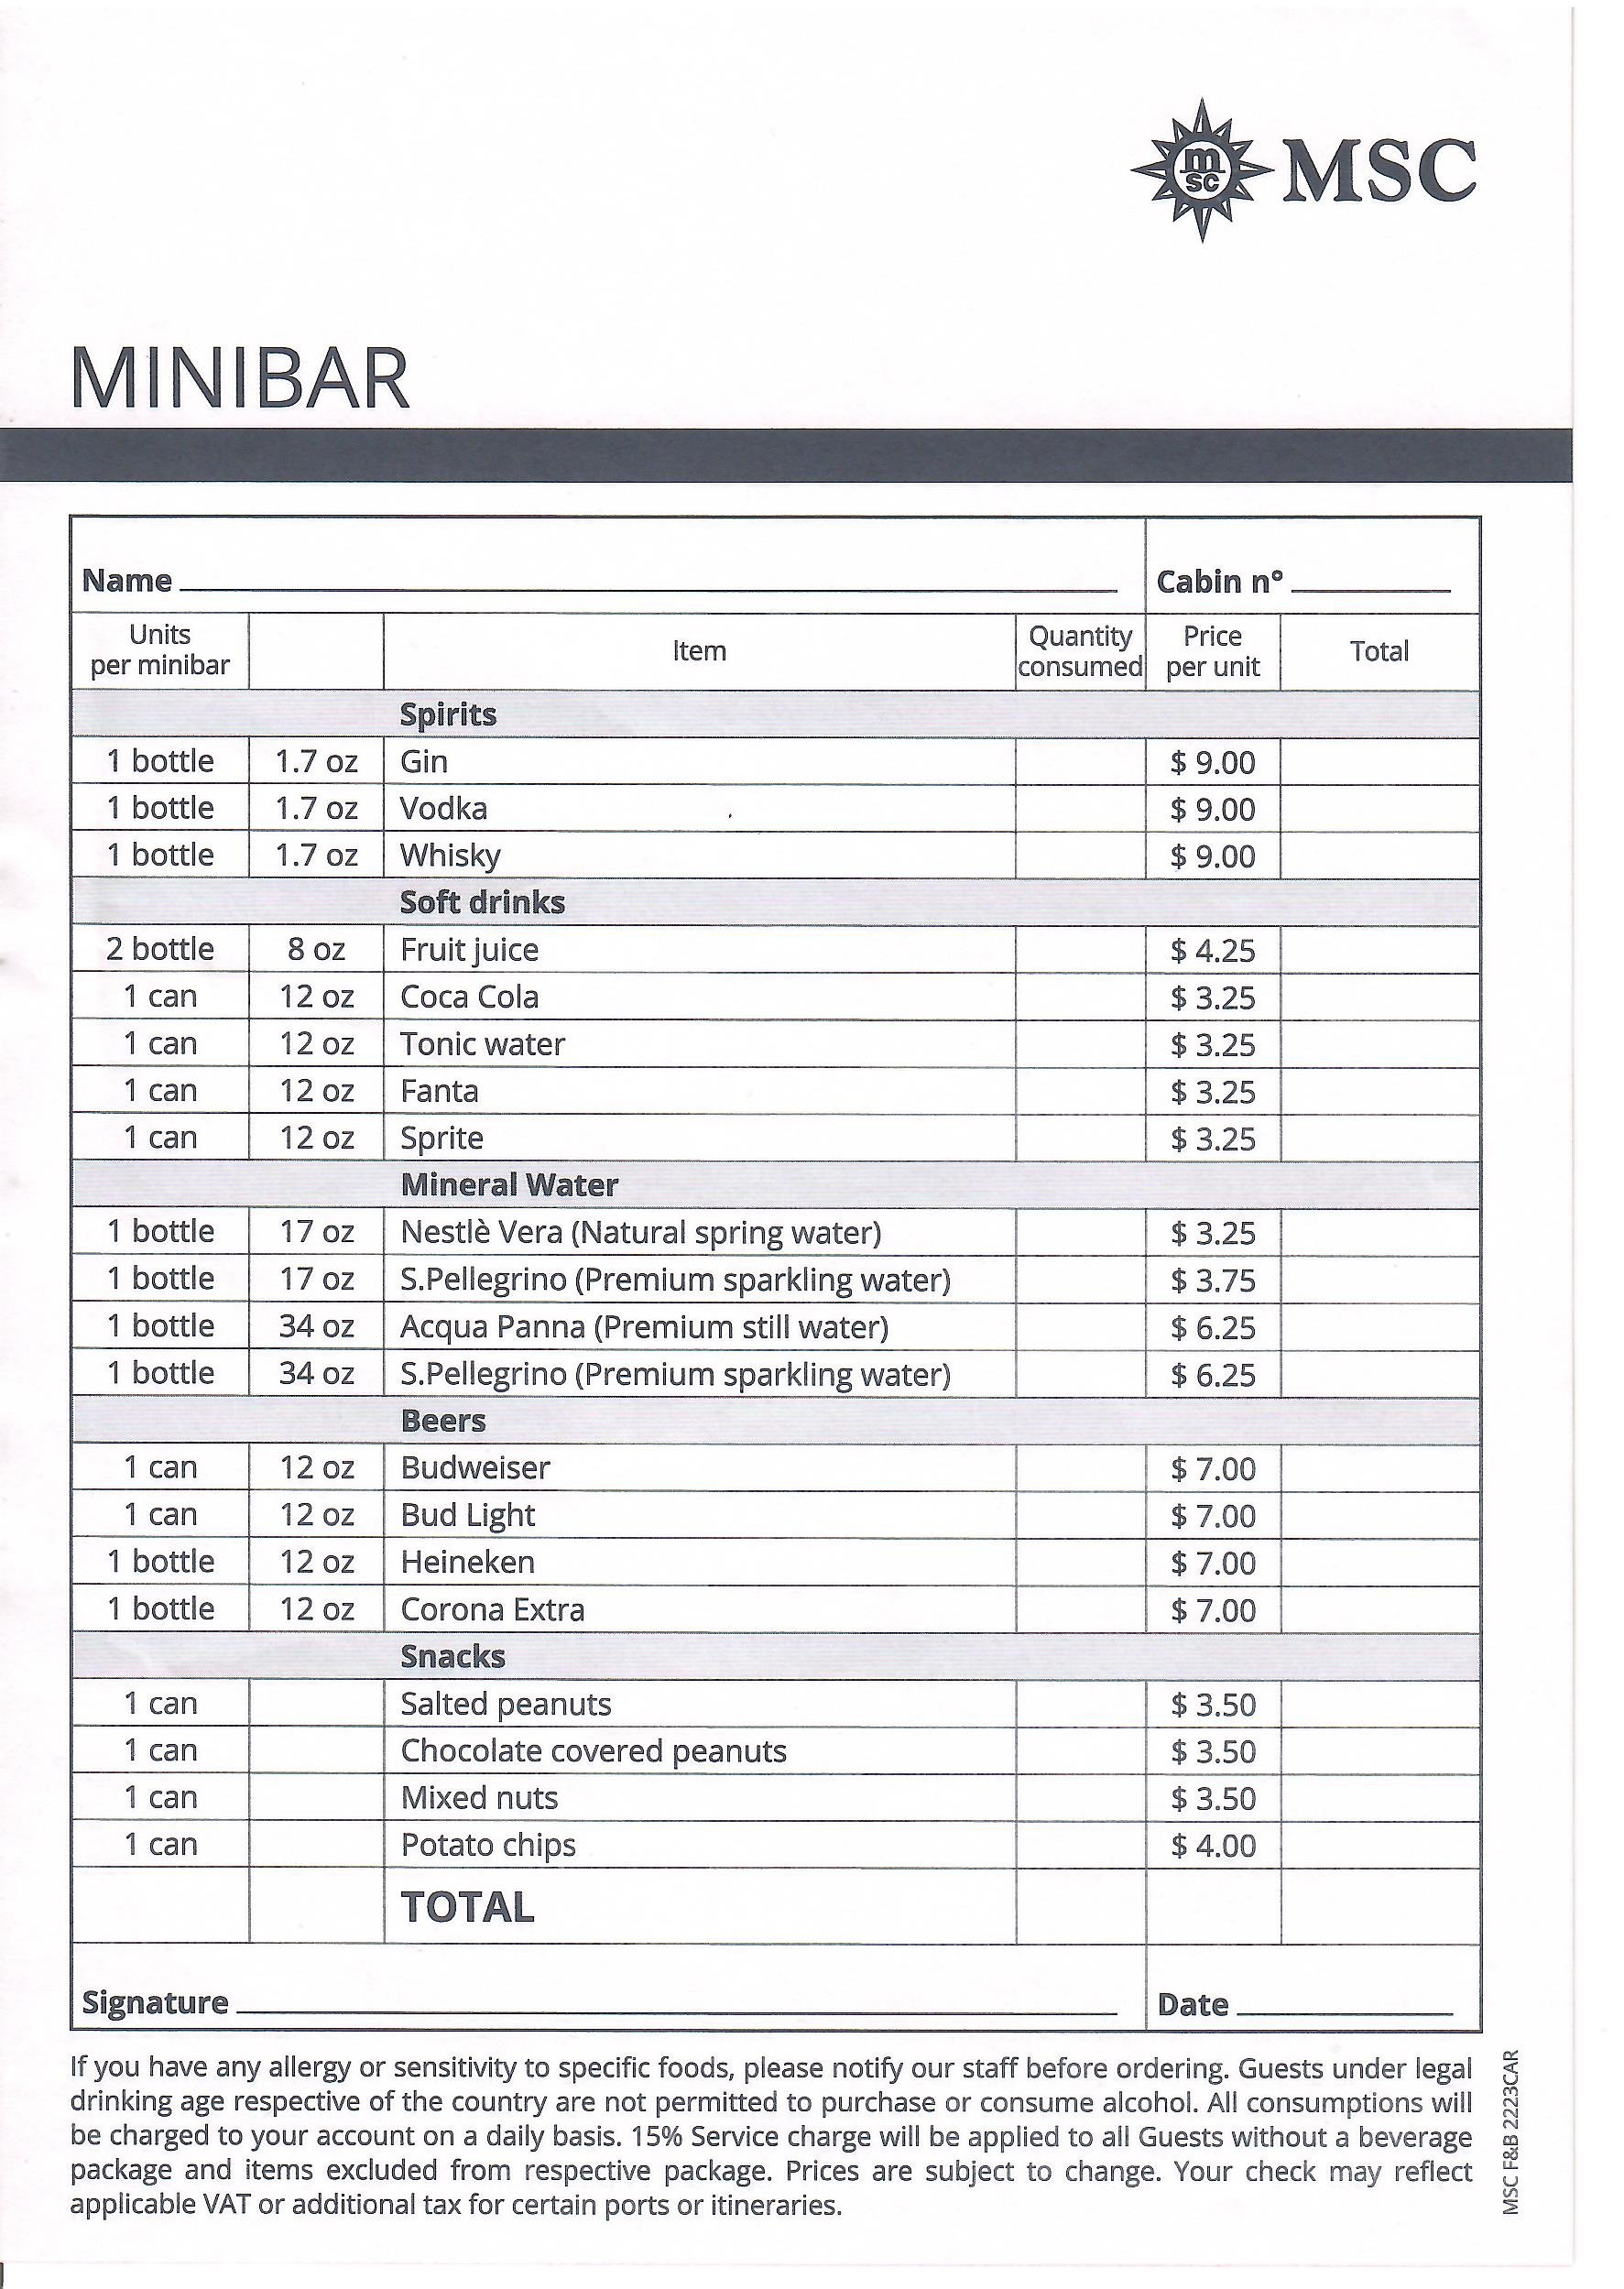 Daily Program - MSC Meraviglia - MINIBAR -2023 -  Jan 29 - Feb 02 - page 01.jpg